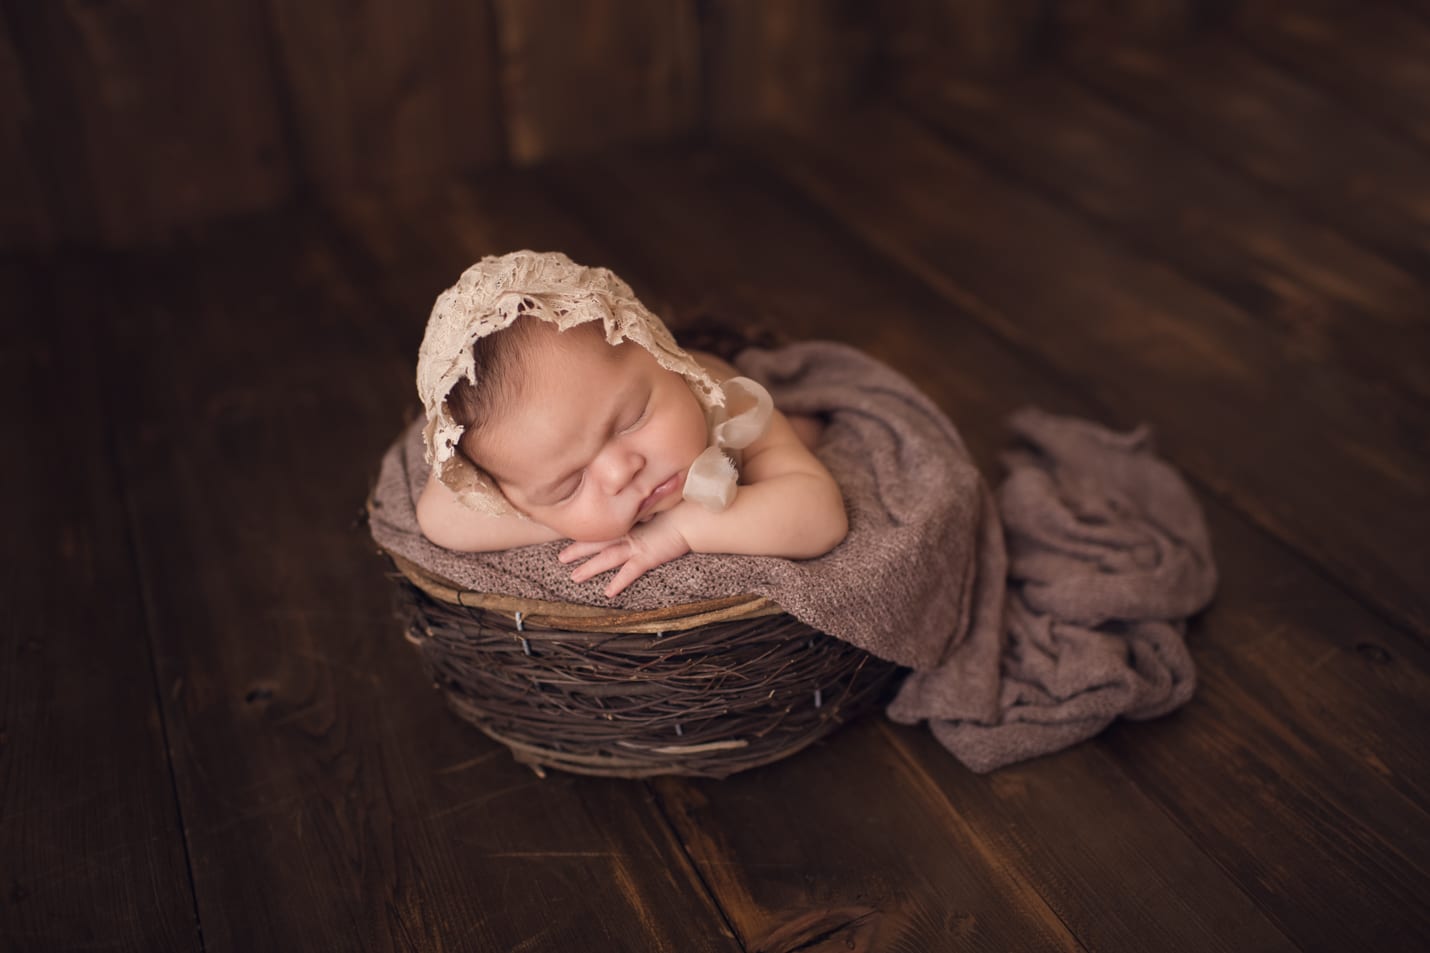 Arlington Heights Newborn Photographer | Agata Brannon Photography